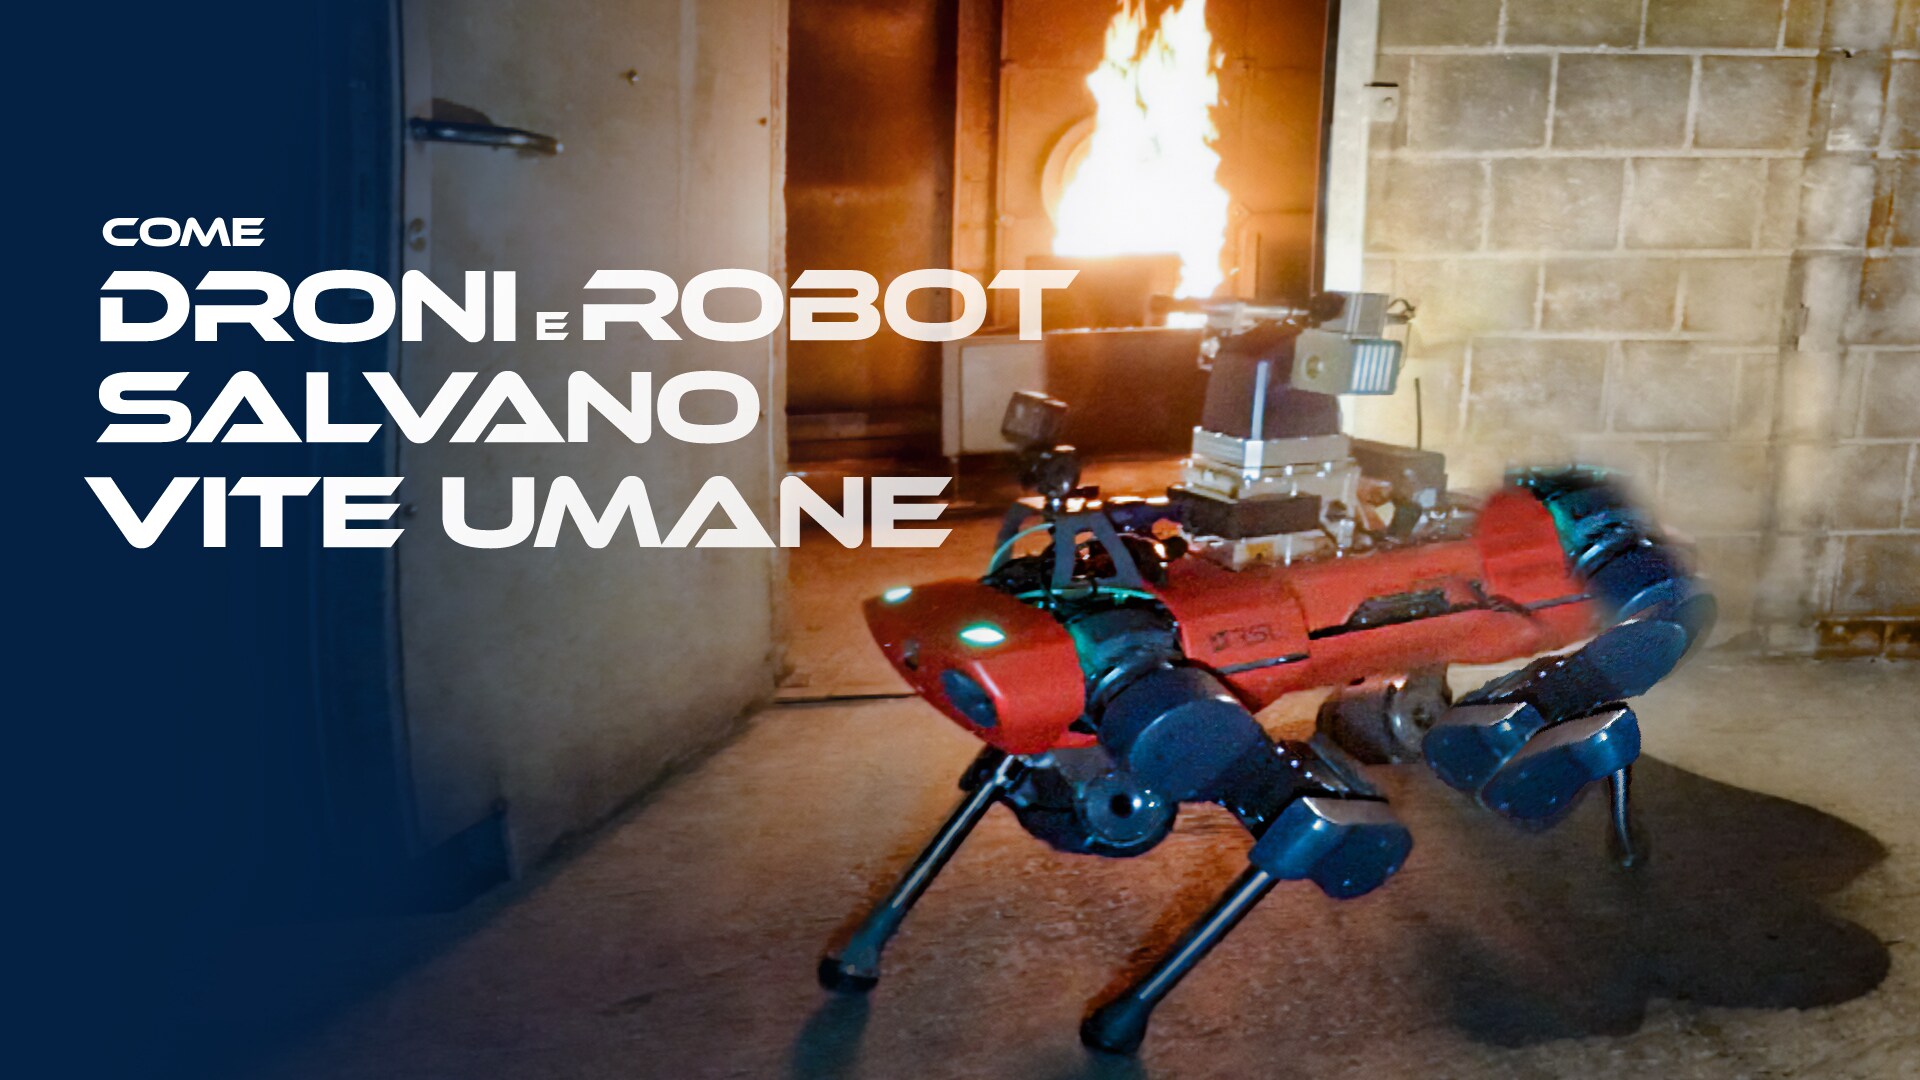 Come droni e robot salvano vite umane